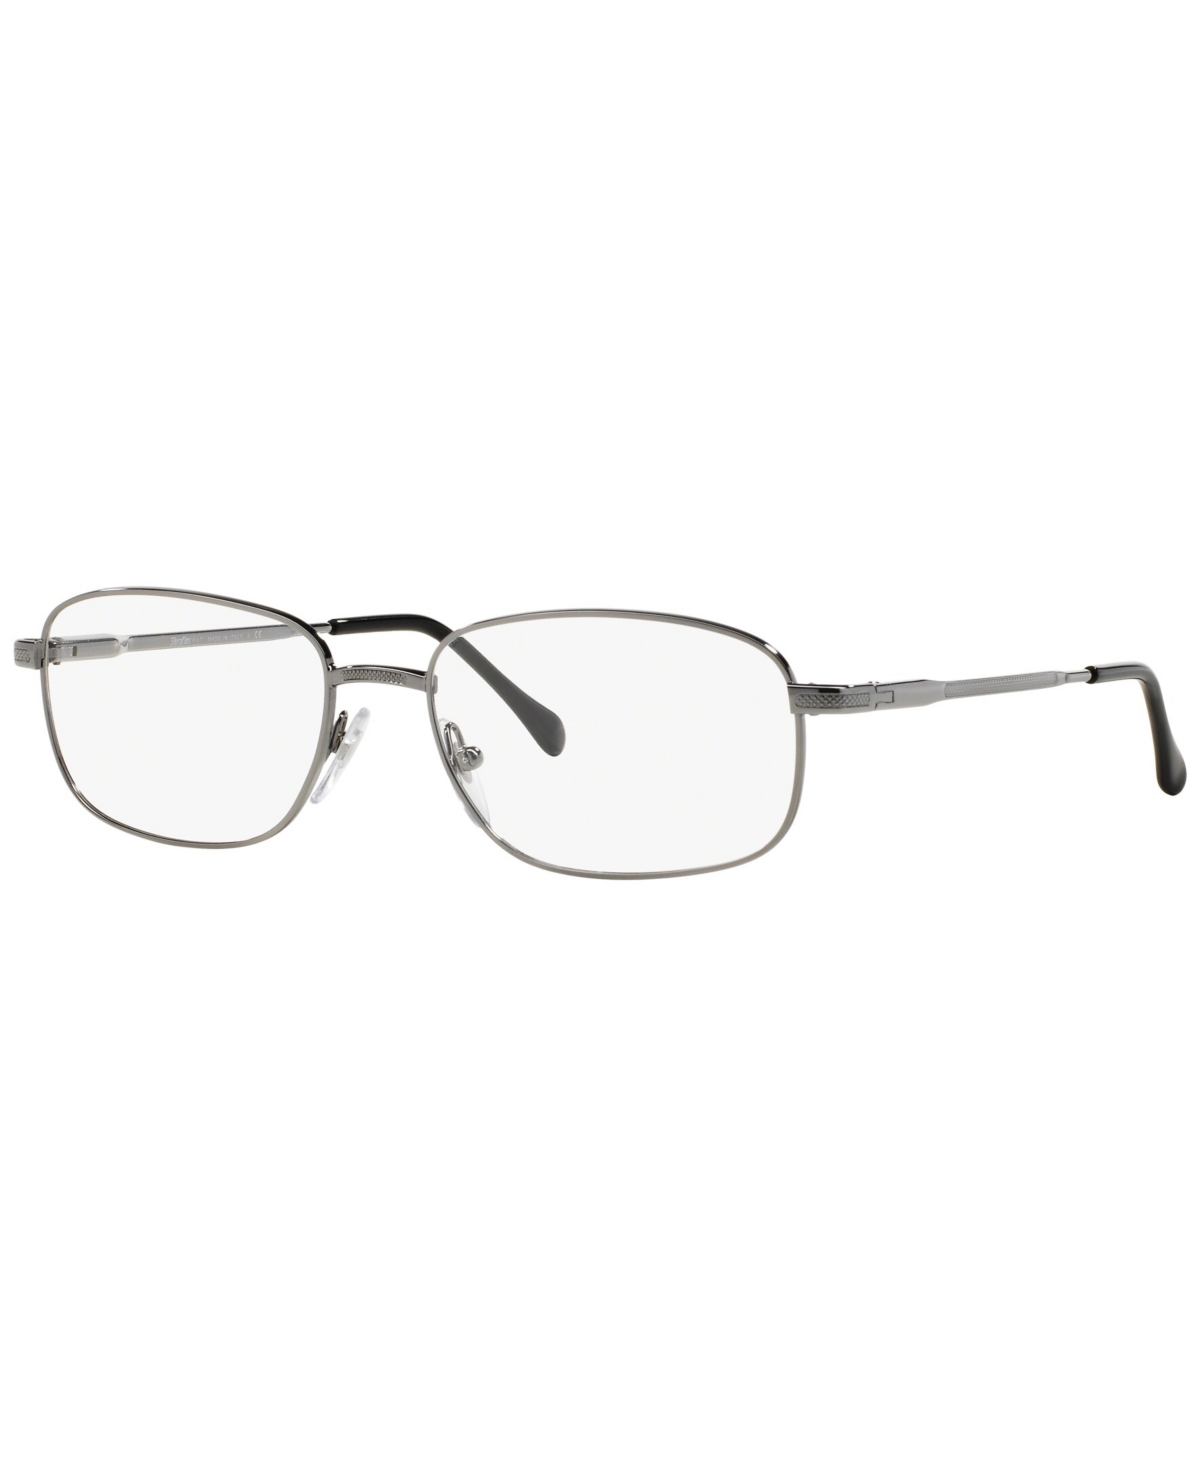 SF2086 Men's Square Eyeglasses - Gunmetal